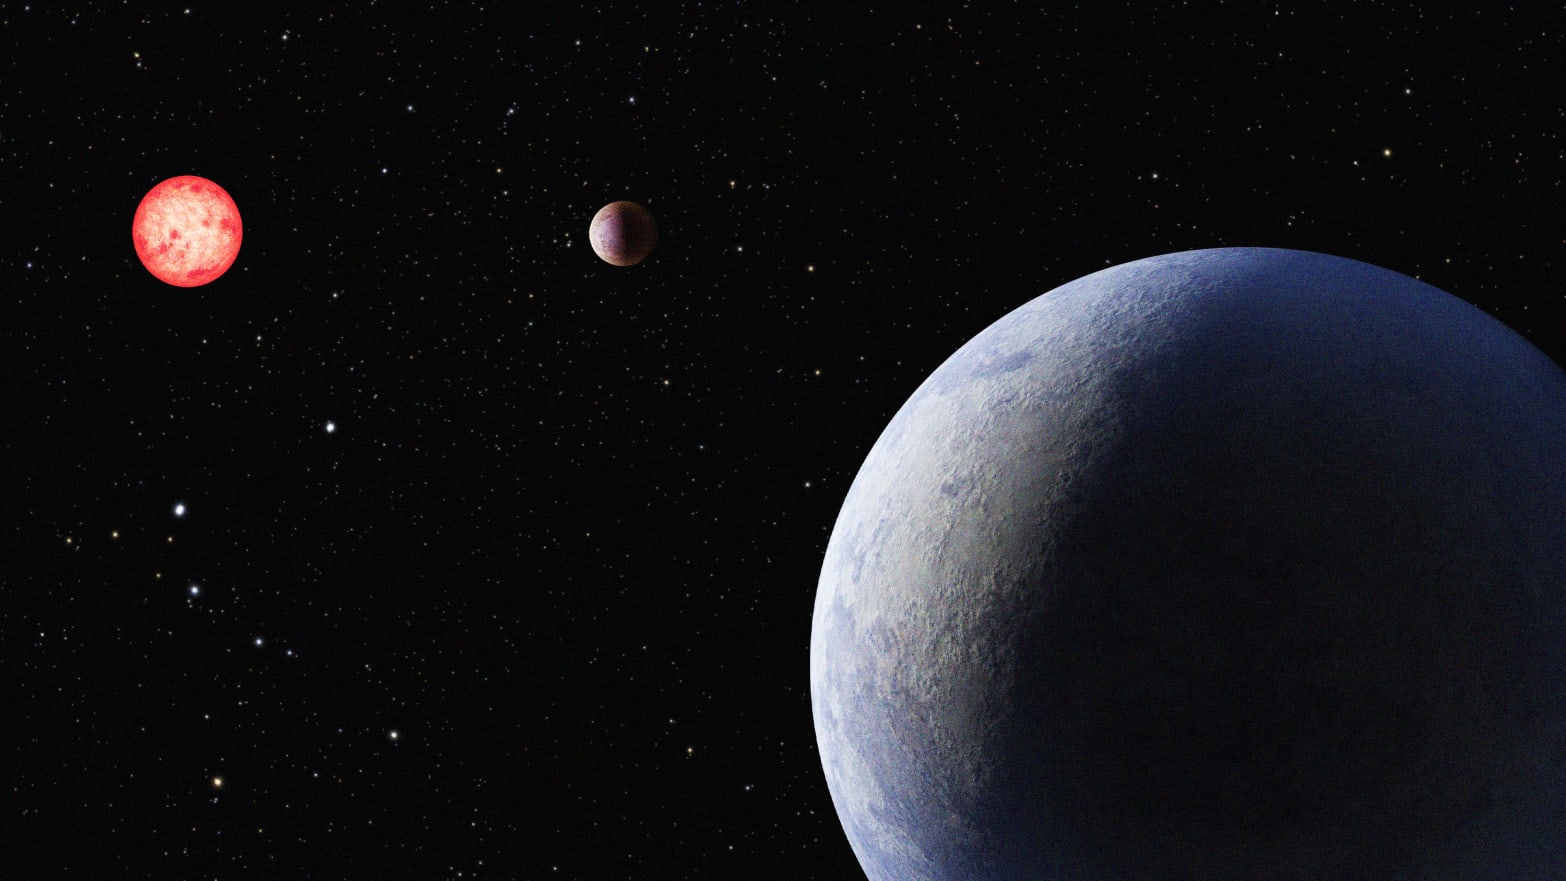 Melting Exoplanet LP 890-9 c May Reveal How Venus Became a Hellscape